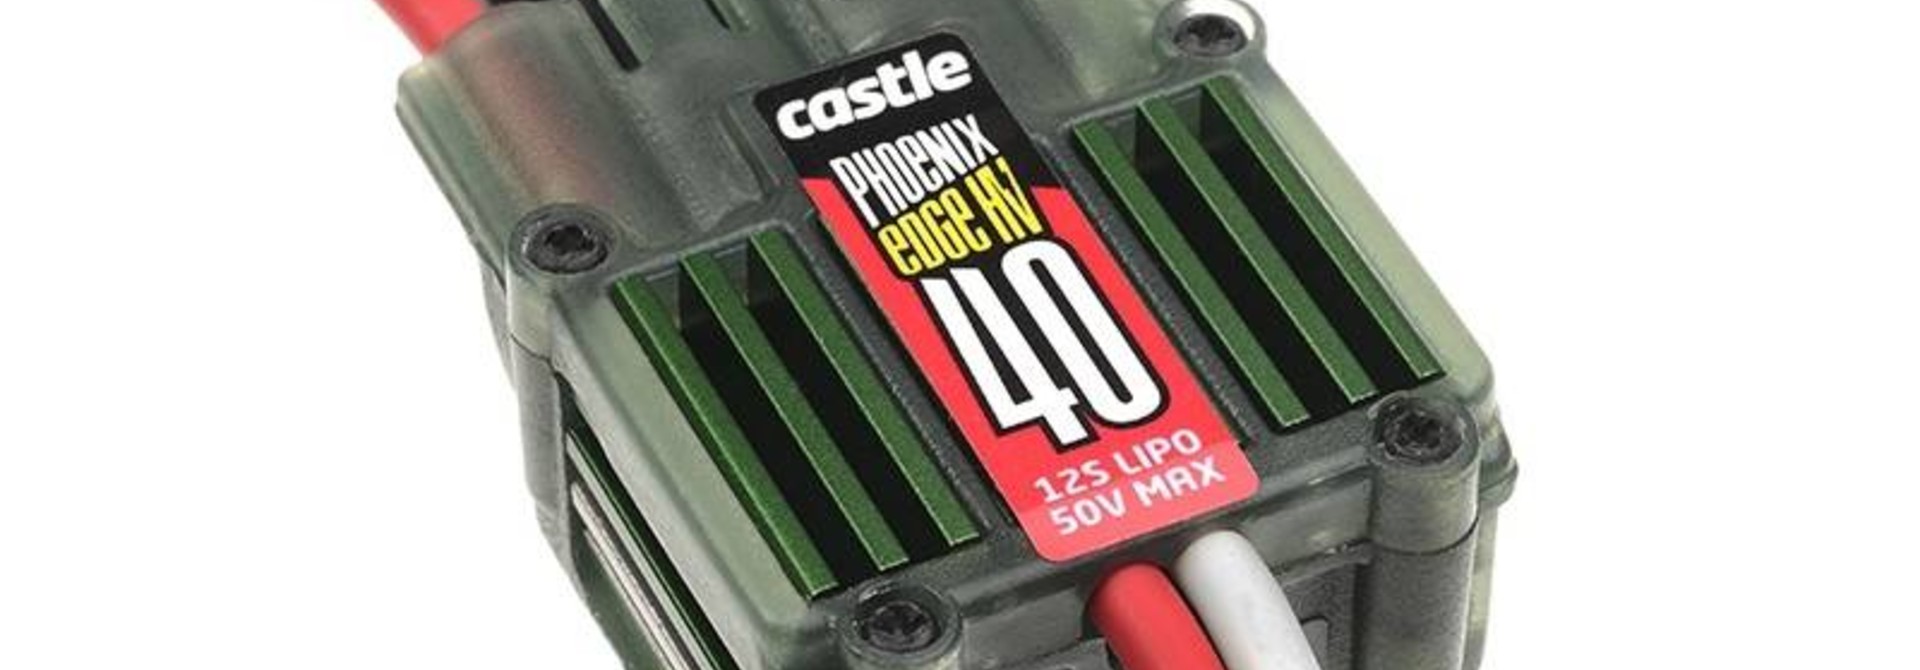 Castle - Phoenix Edge 40 HV - Hoog-vermogen Air-Heli High Voltage Brushless regelaar - Datalogging - Telemetrie mogelijkheid - Aux. kabel - 6-12S - 40A - Opto